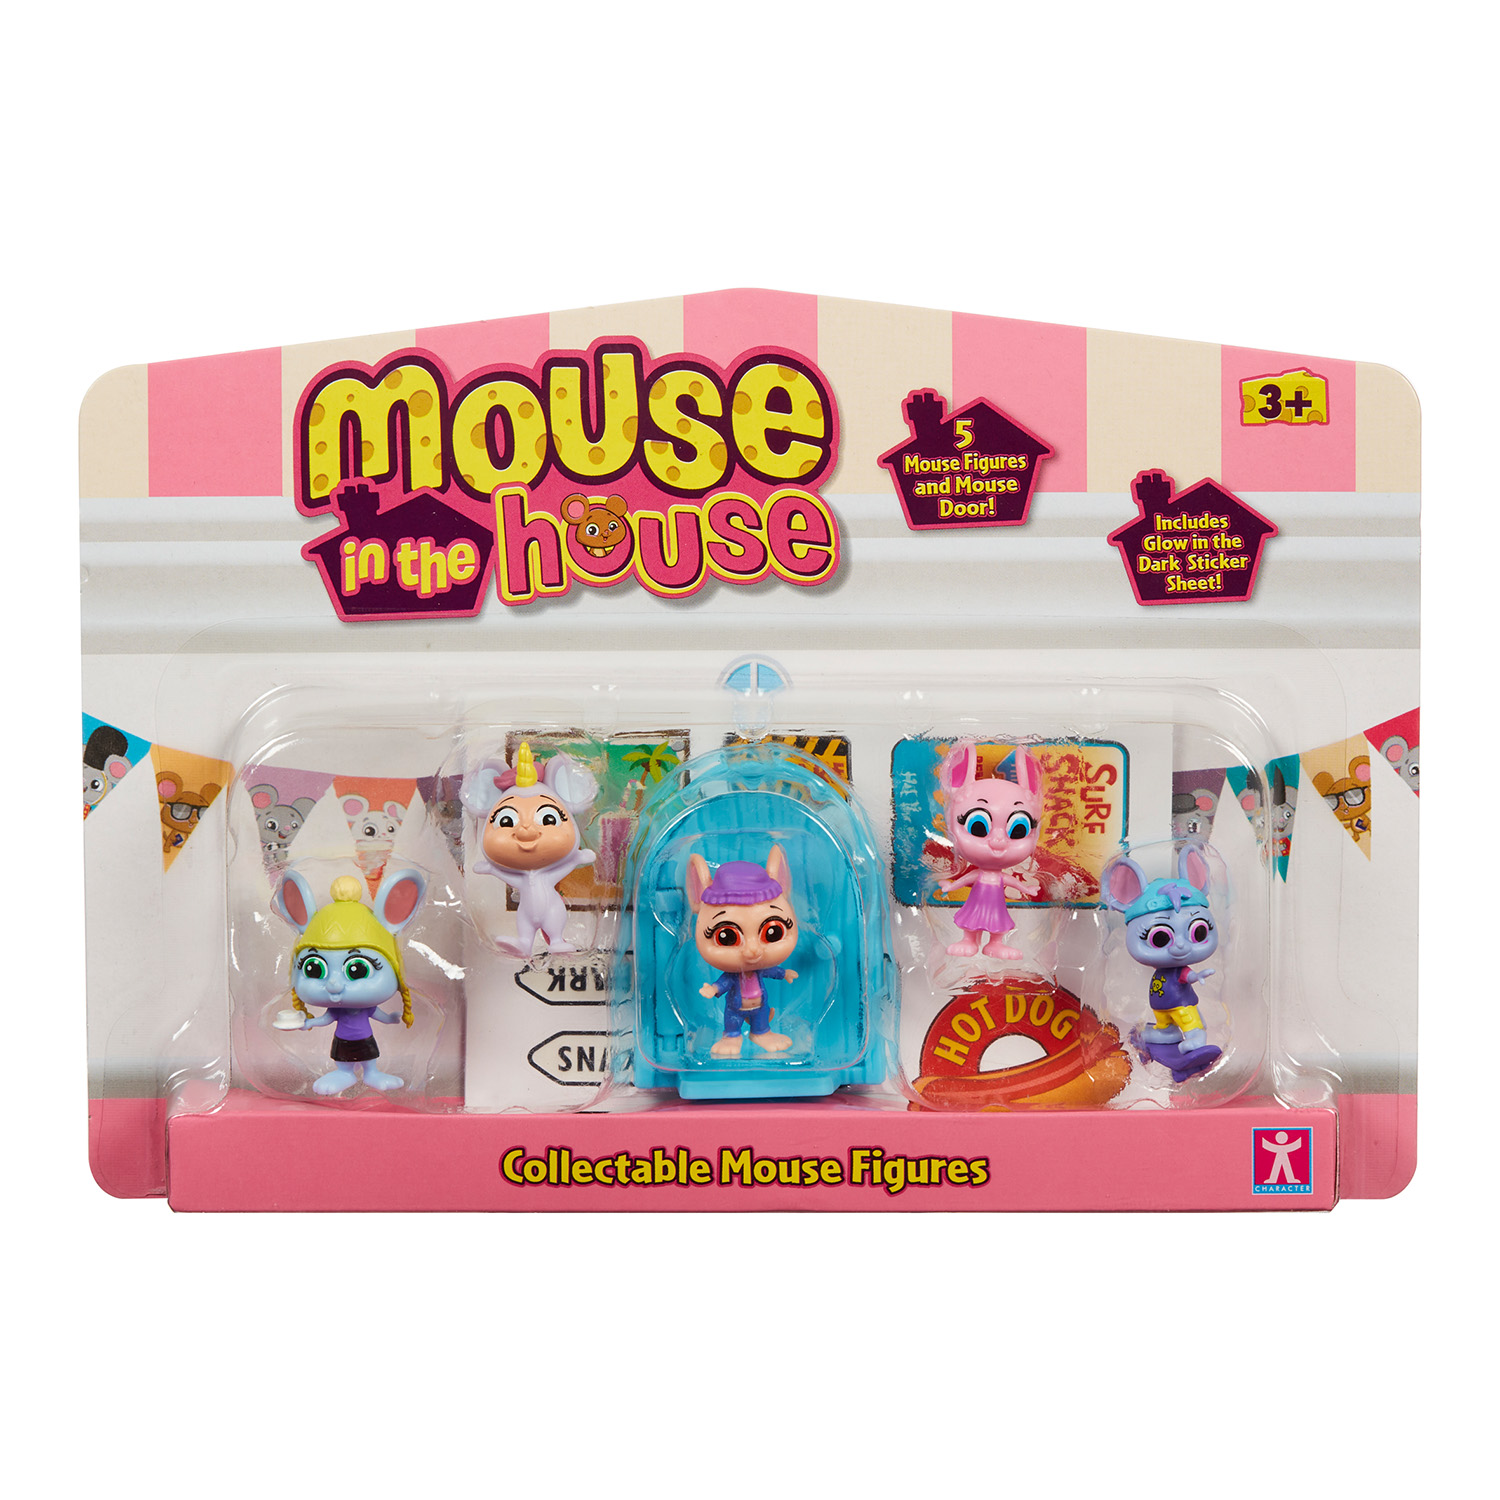 Игровой набор 5в1 фигурки Милли и мышки Mouse in the House, Синий 41725 милли водович ы